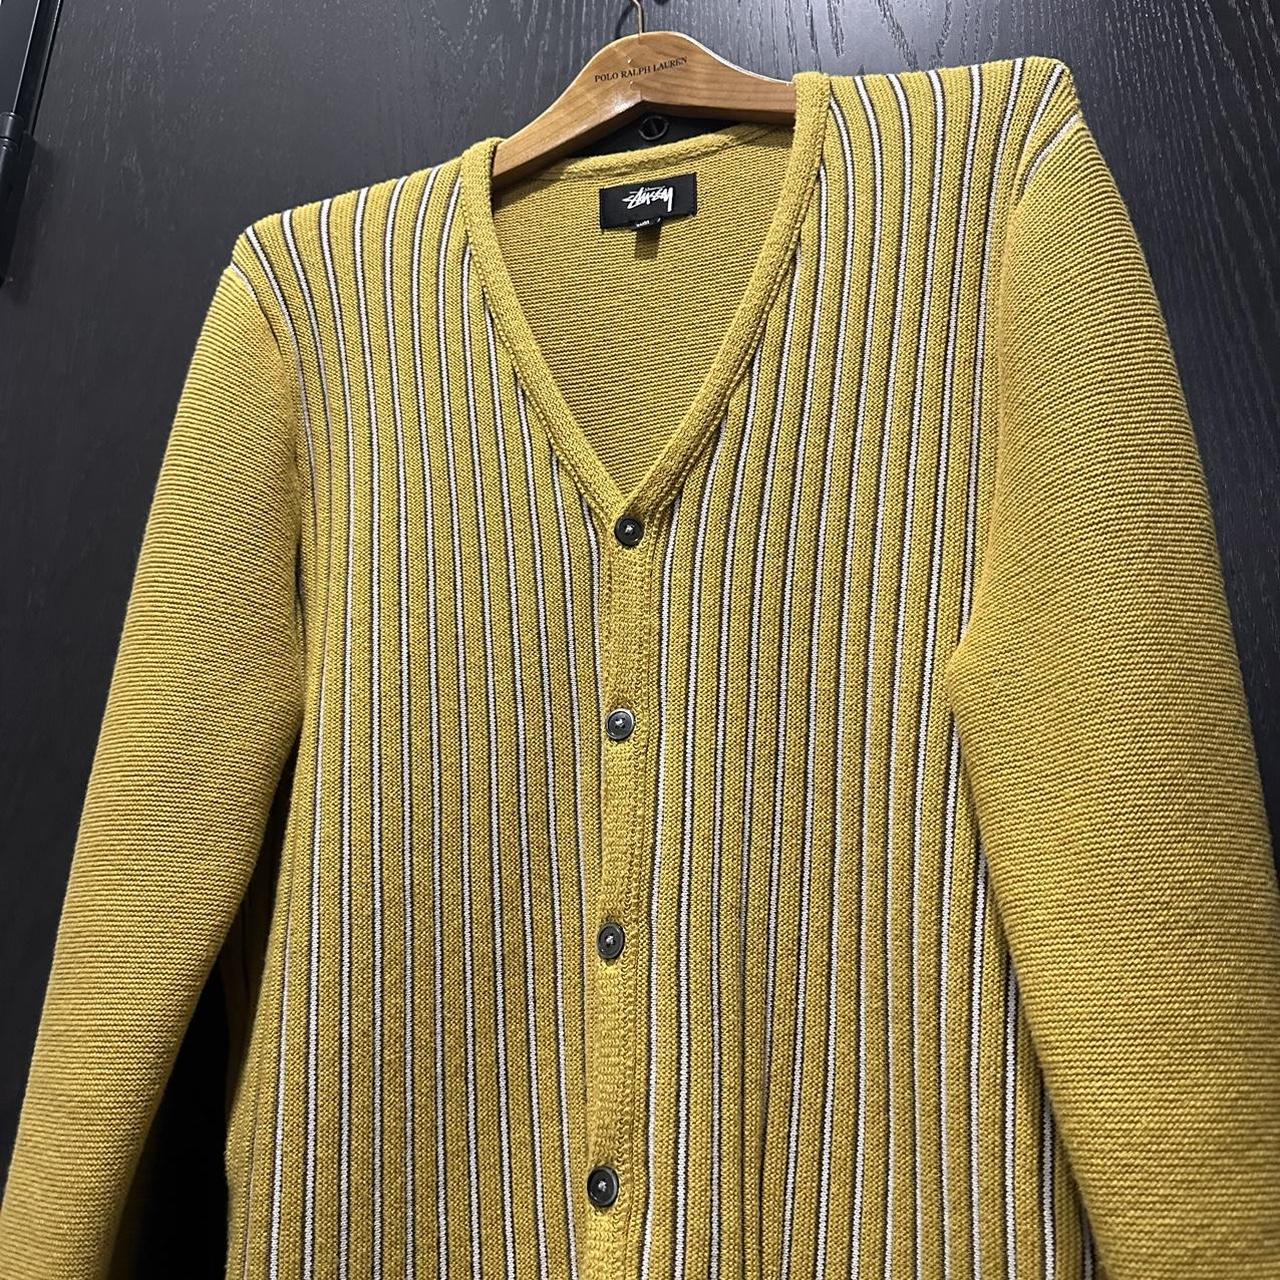 Stussy Stripe Cardigan Sweater Size Medium Pit to... - Depop